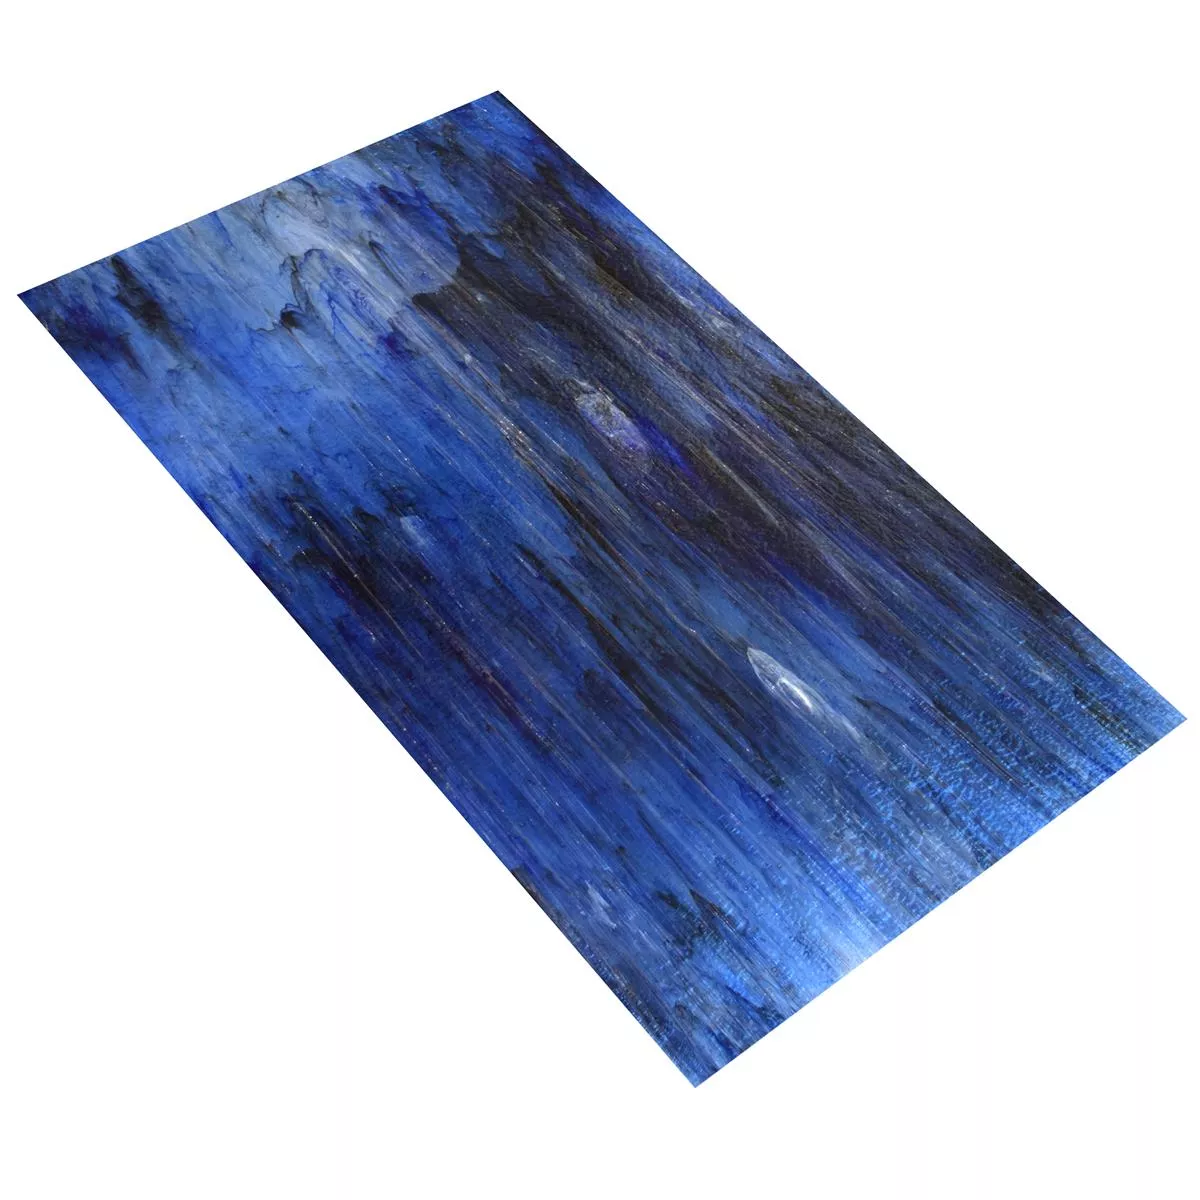 Vidro Azulejos Trend-Vi Supreme 30x60cm